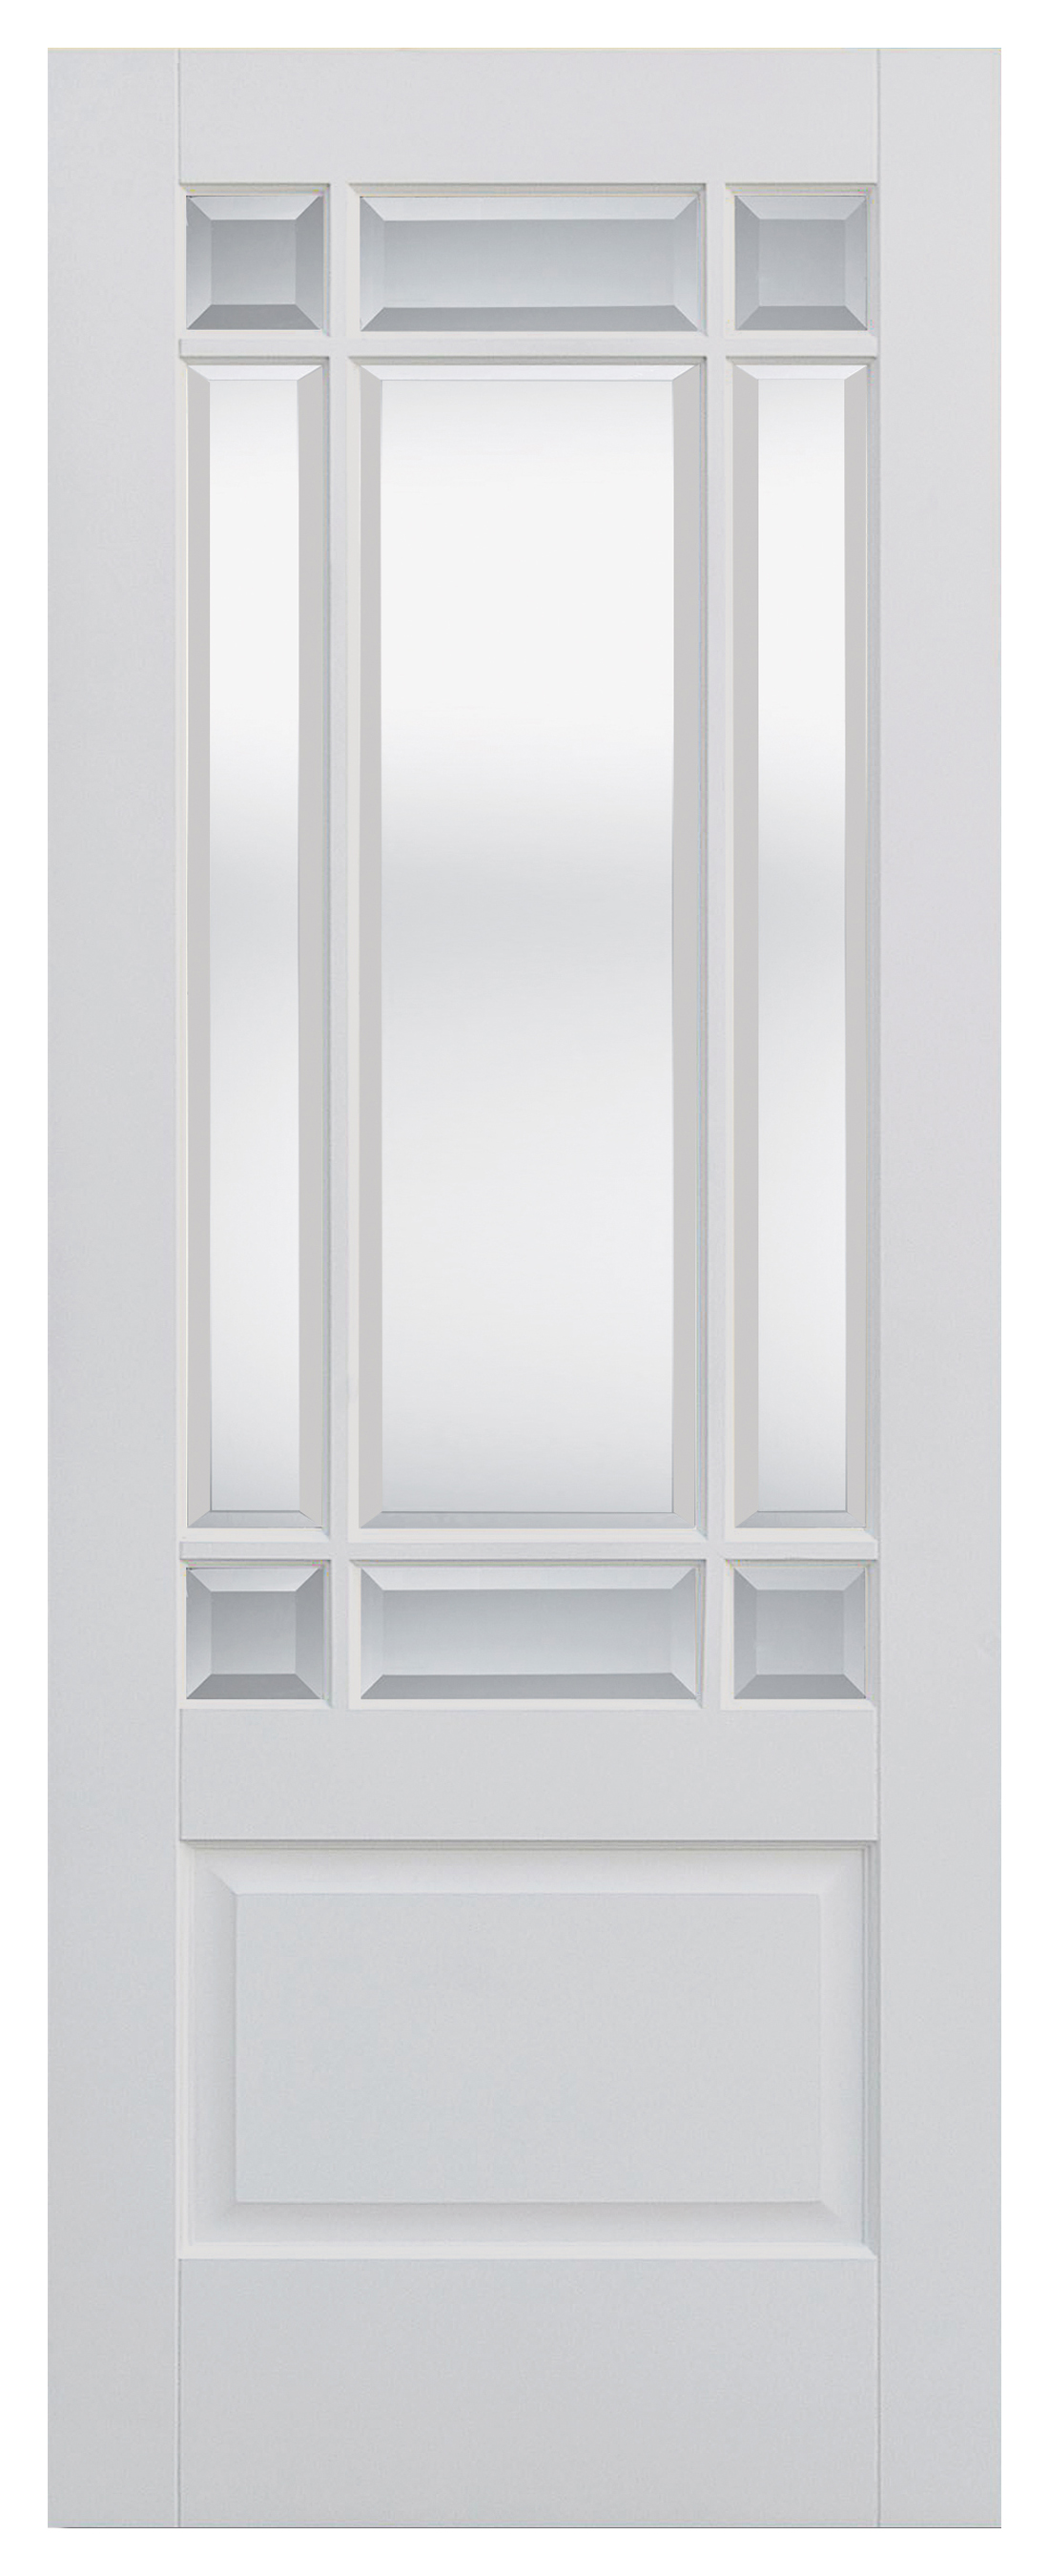 Image of LPD Internal Downham 9 Lite Glazed Primed White Solid Core Door - 686 x 1981mm